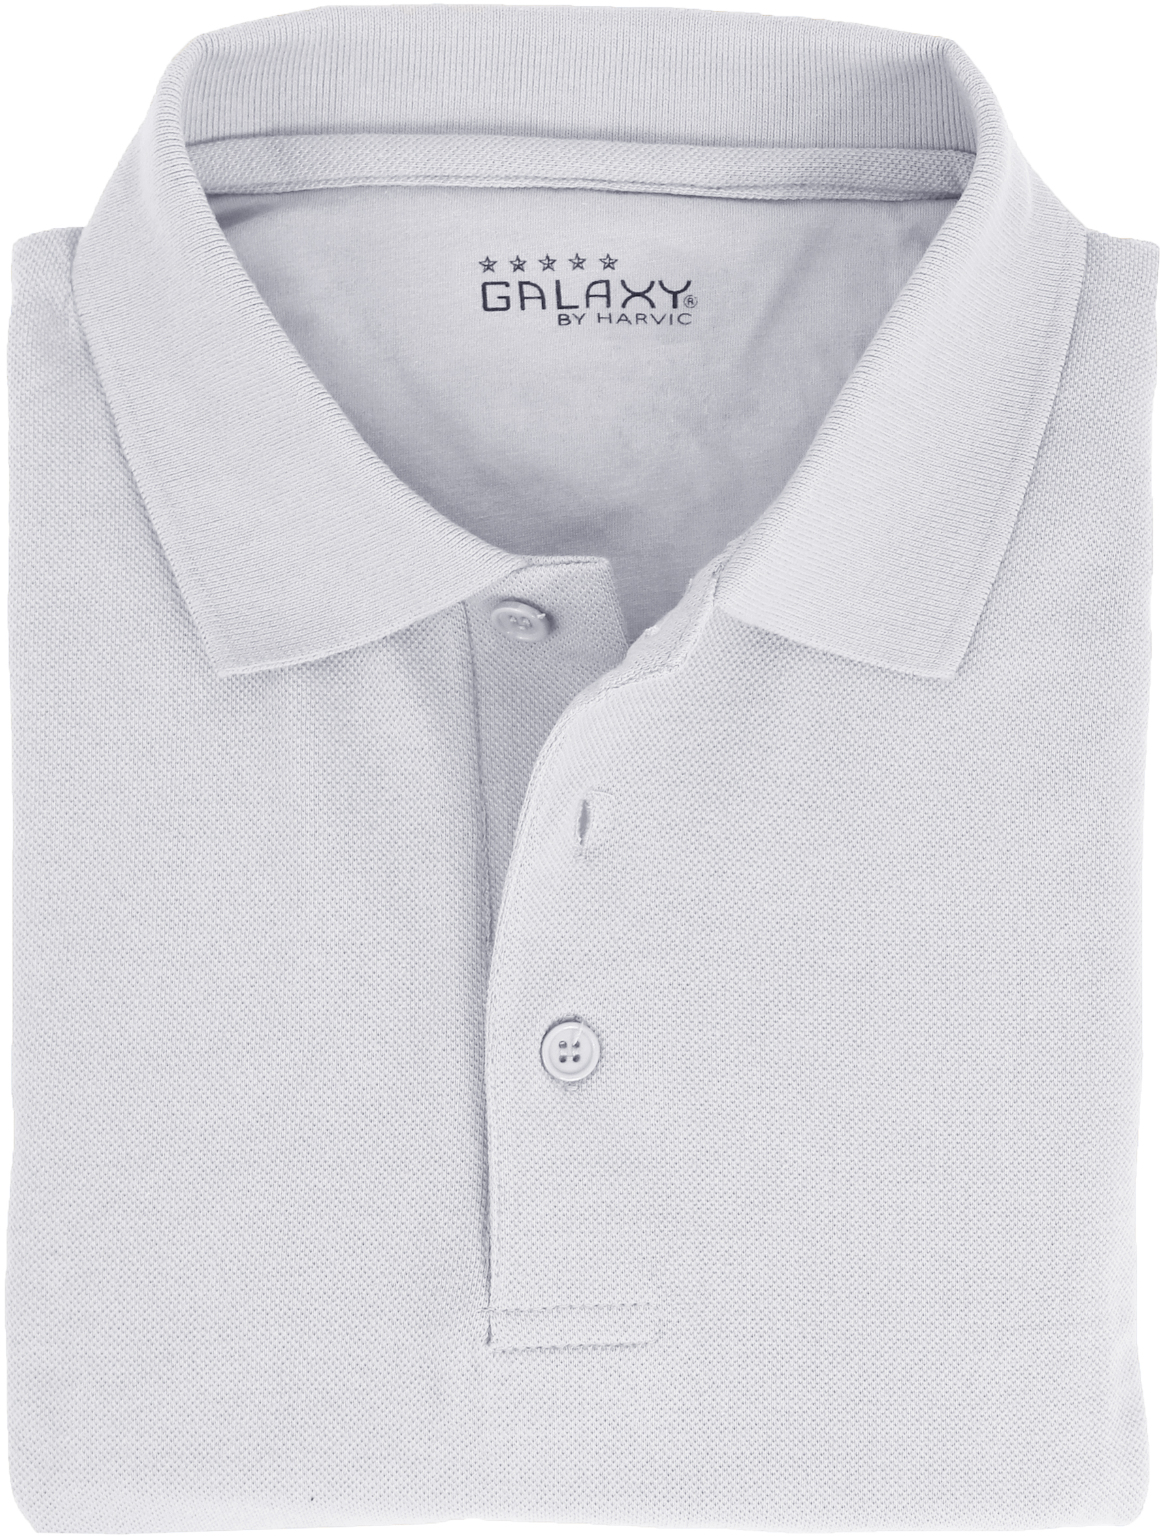 Wholesale Big Mens Short Sleeve Pique Polo Shirt School Uniform in